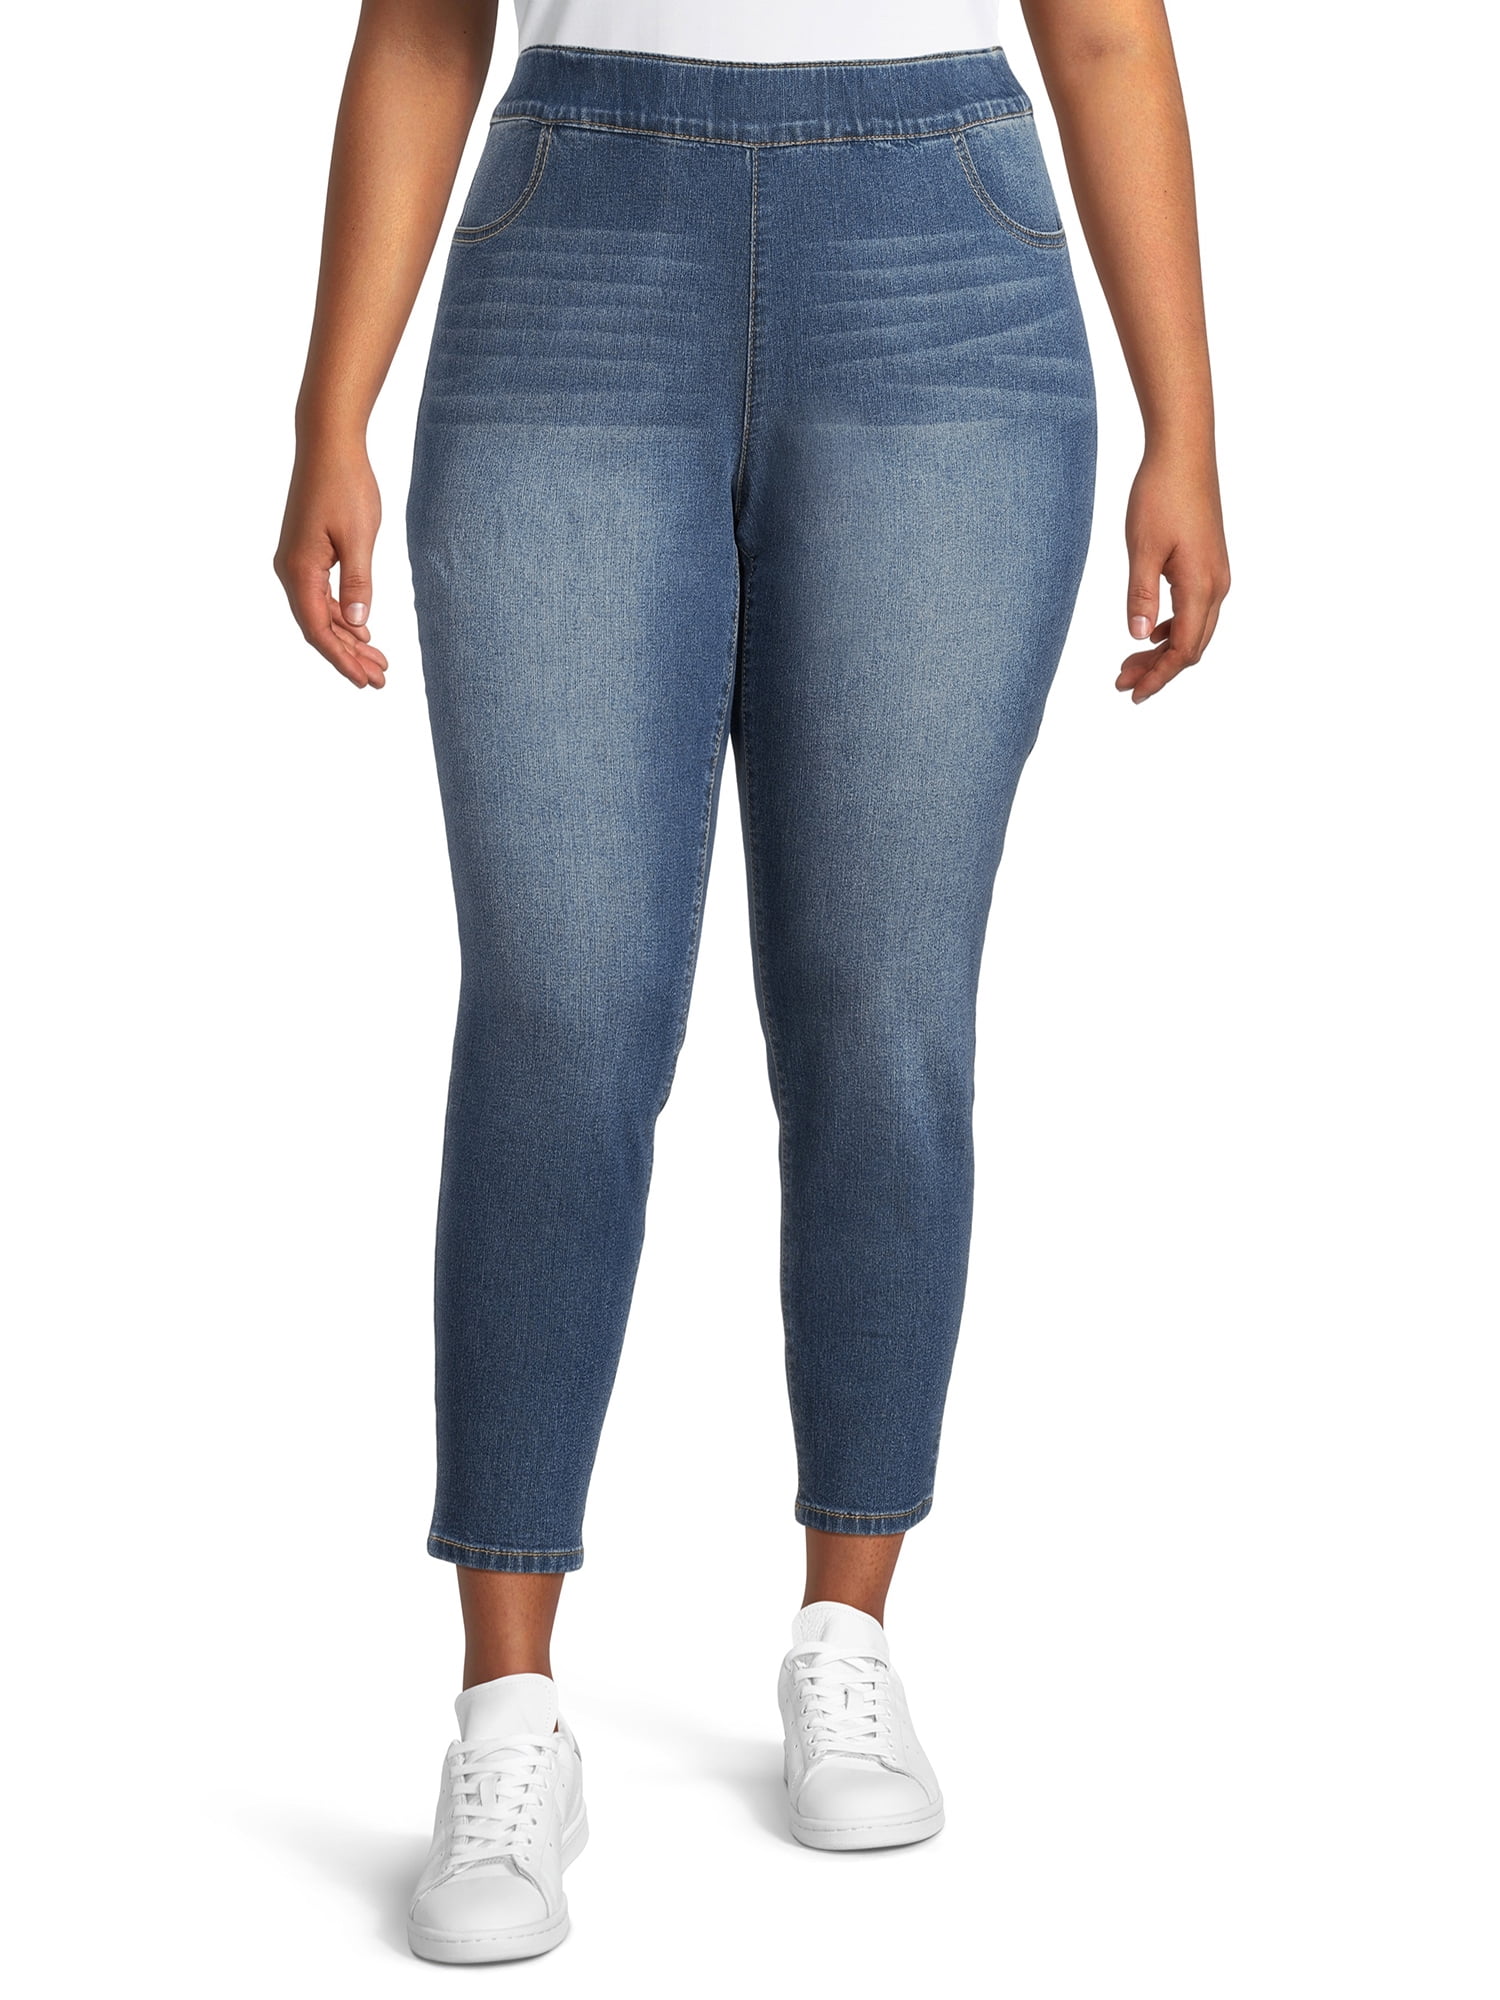 A3 Denim Women's Plus Size High Rise Pull-On Stretch Jeans - Walmart.com